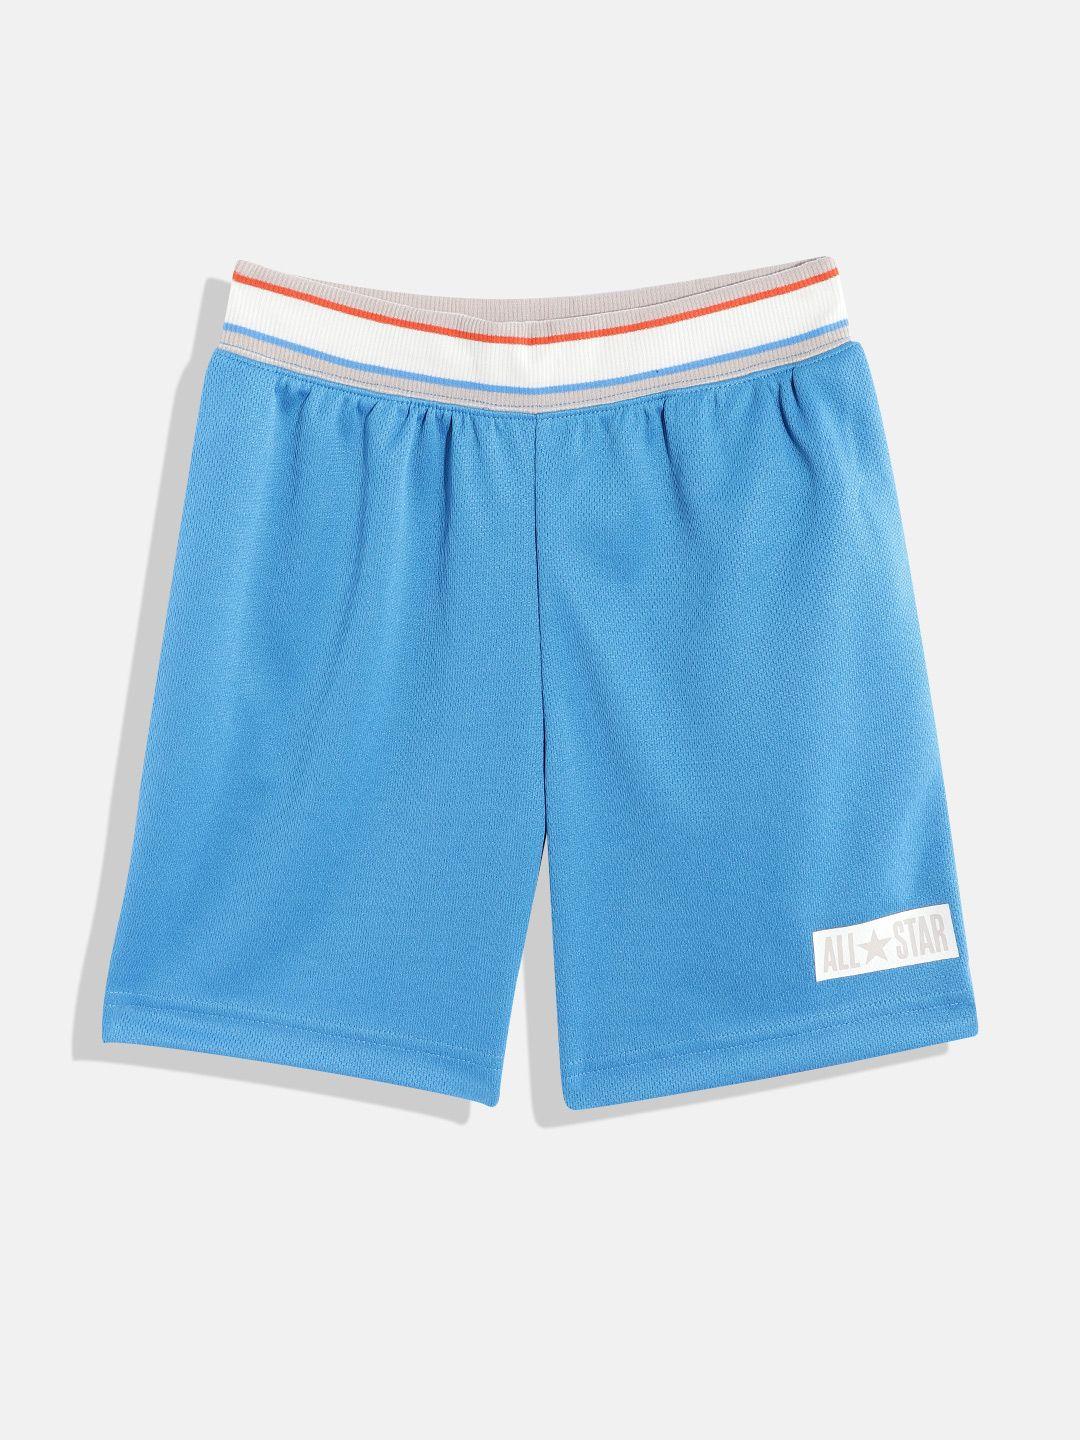 converse boys blue shorts